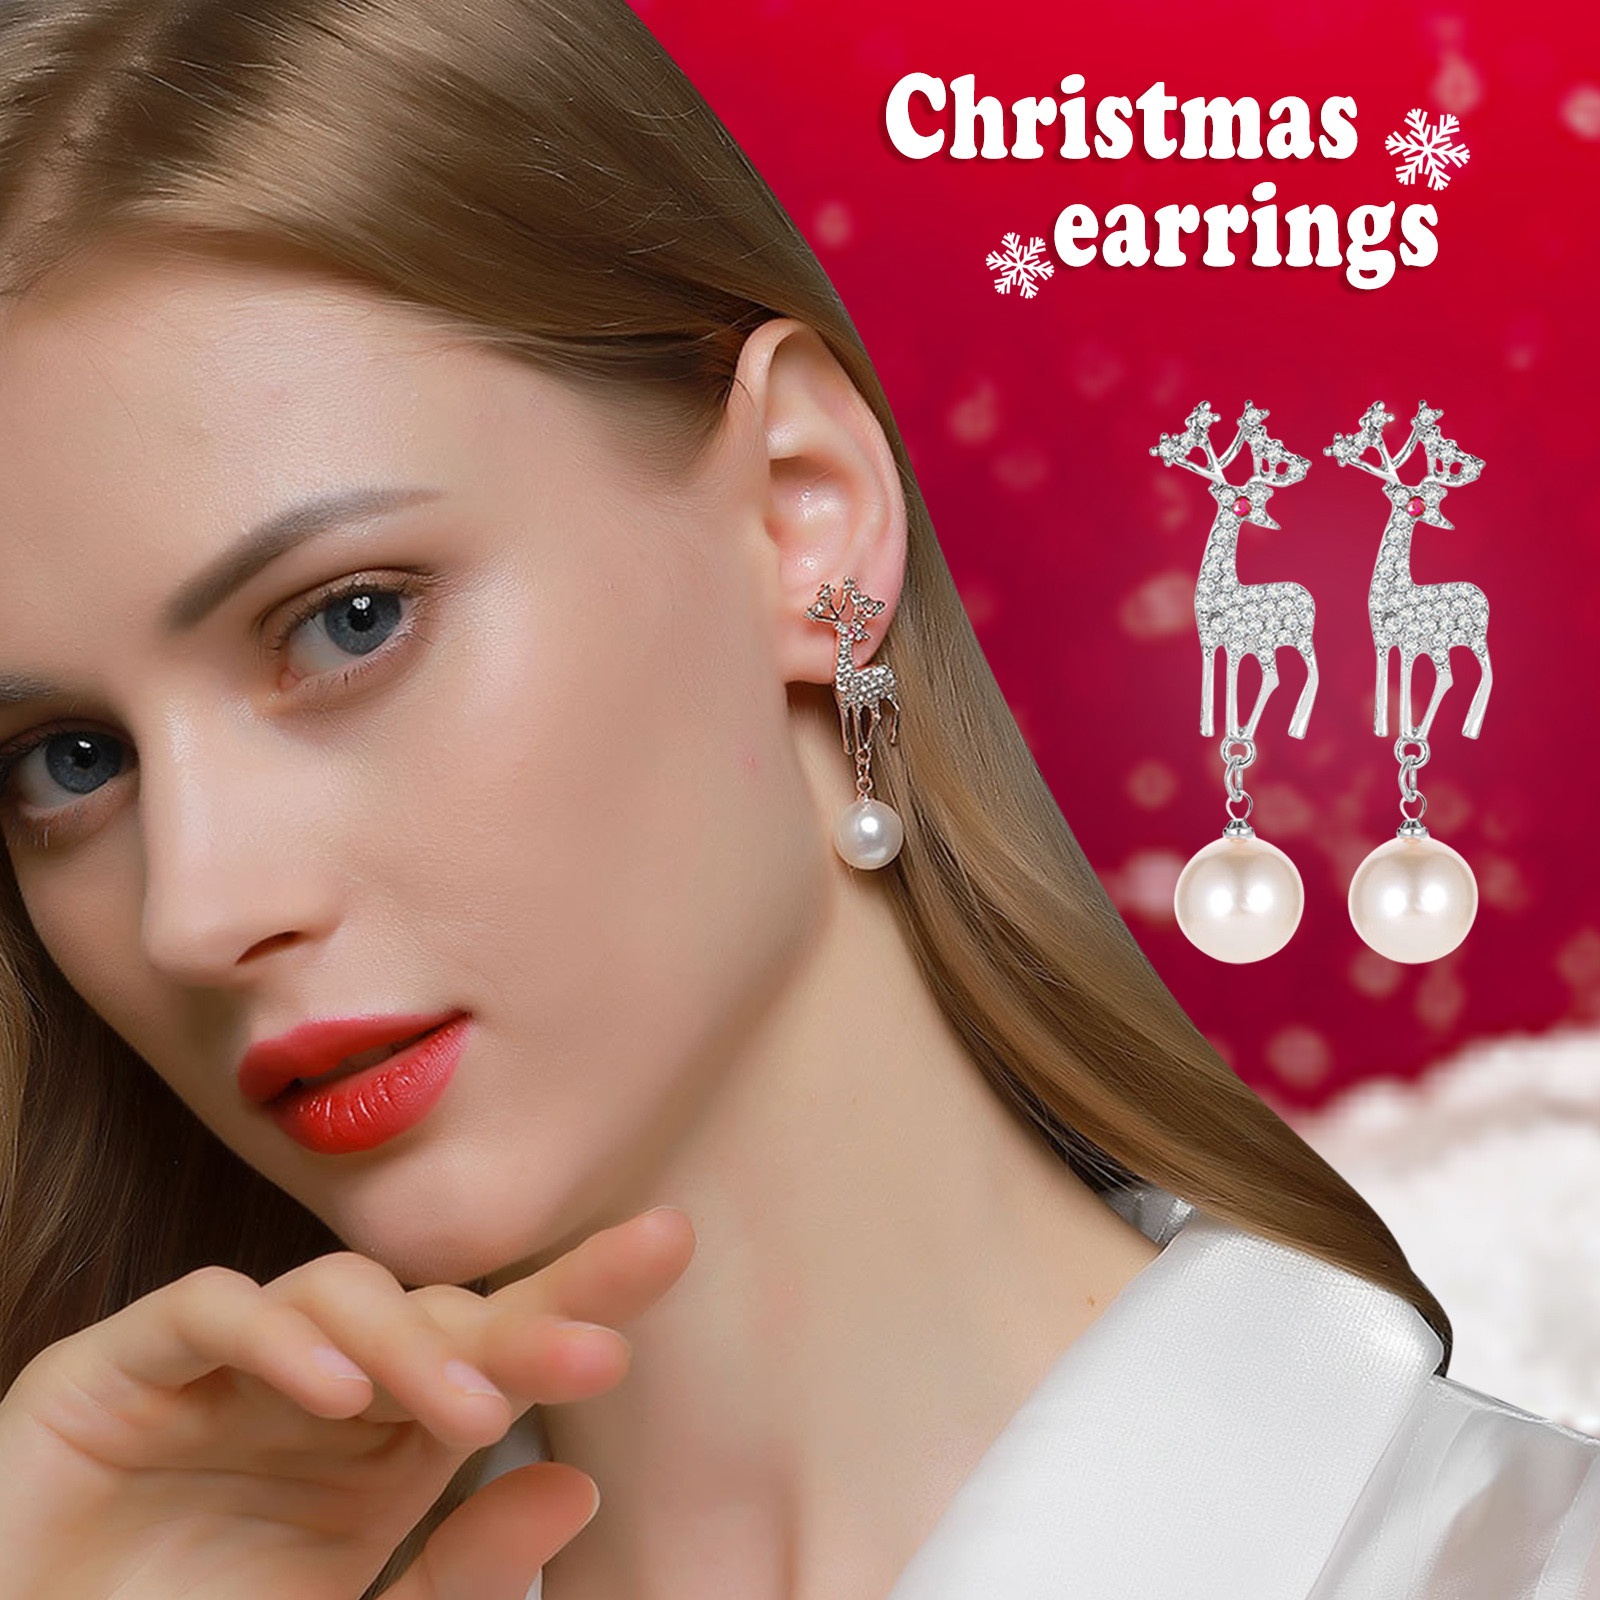 Kayannuo Christmas Clearance Women Fashion Earrings Christmas Earrings Cute Festive Jewelry Ear Wrap Christmas Gifts For Women - image 1 of 3